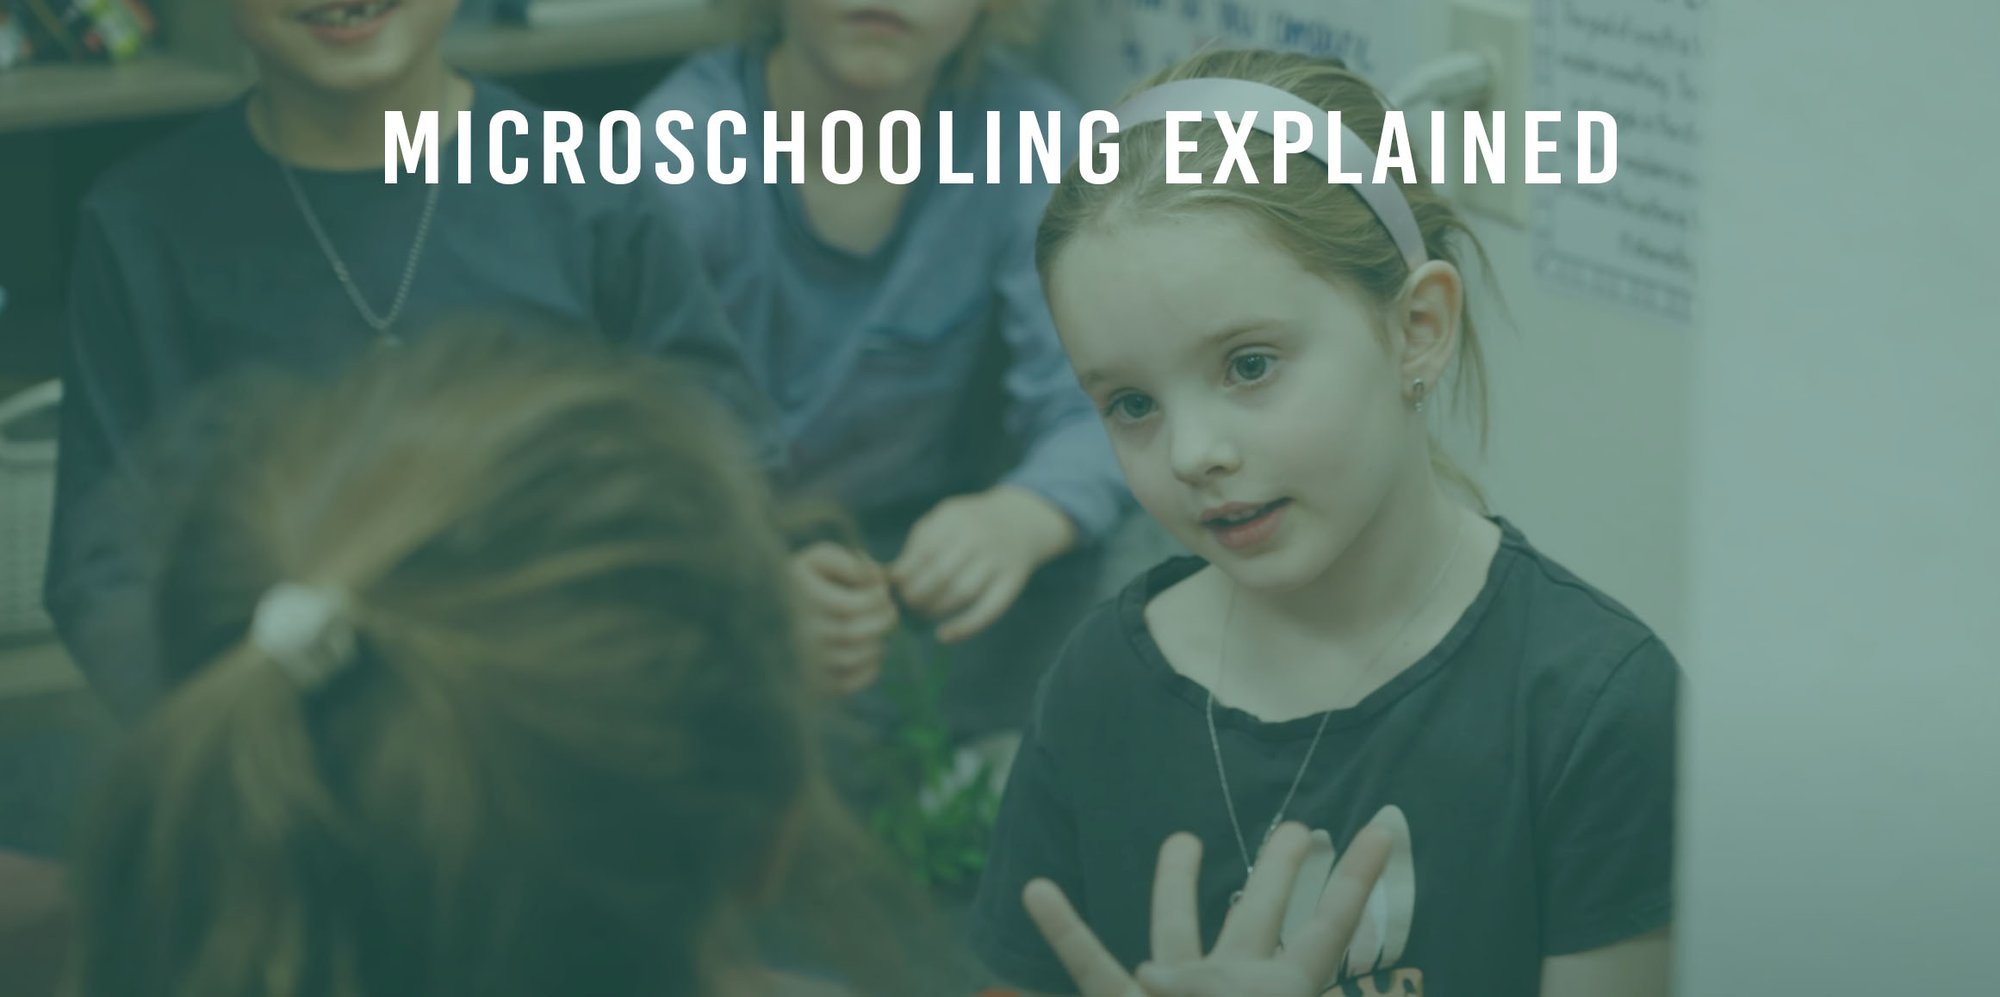 Microschooling Explained Thumbnail_Horizontal